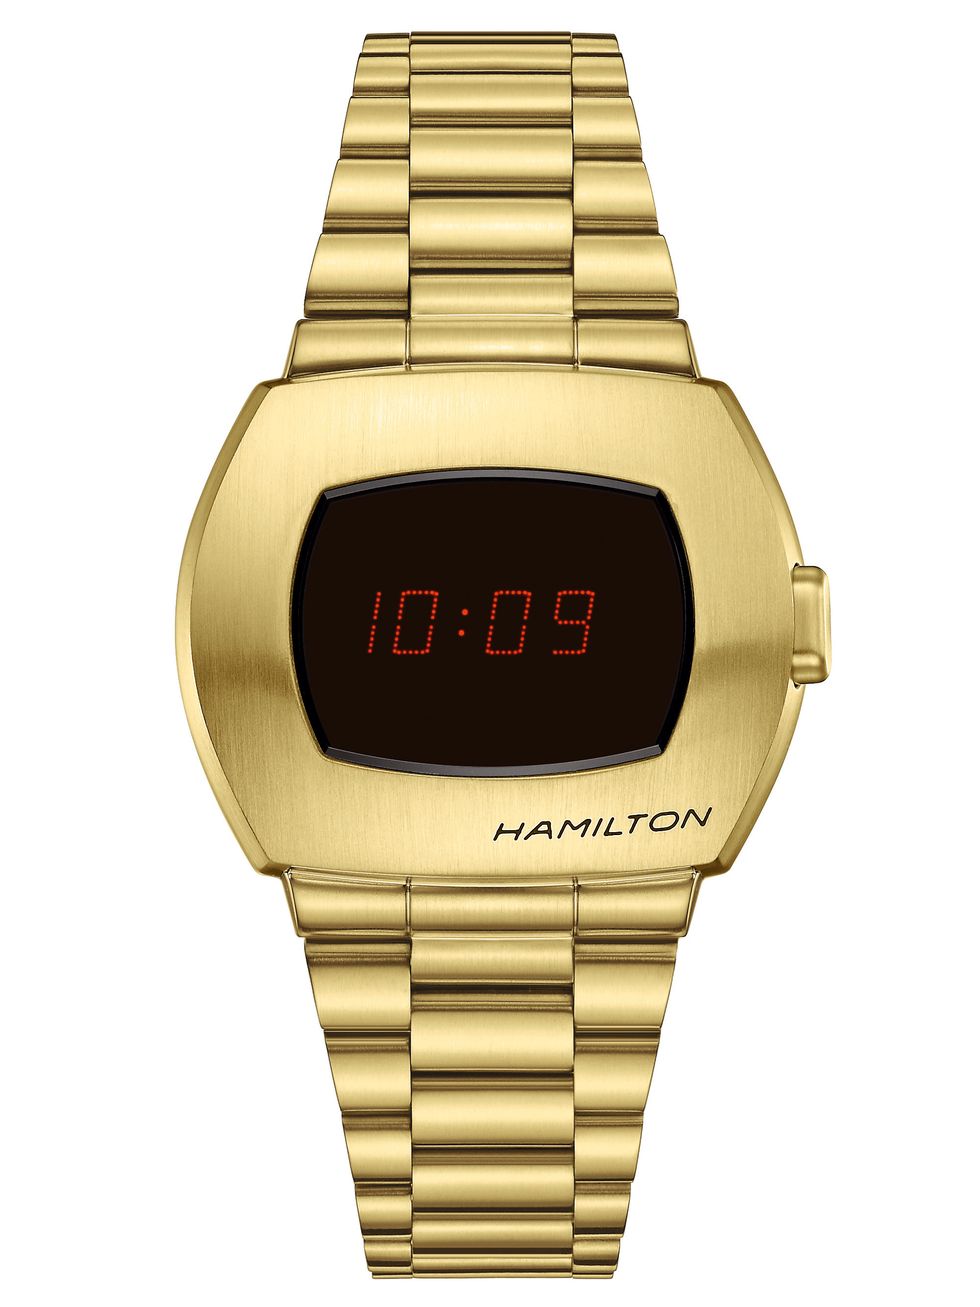 hamilton, 時計, 世界初, led, デジタルウォッチ, 復刻, ハミルトン psr, ハミルトンパルサー, パルサー, 時計, 腕時計